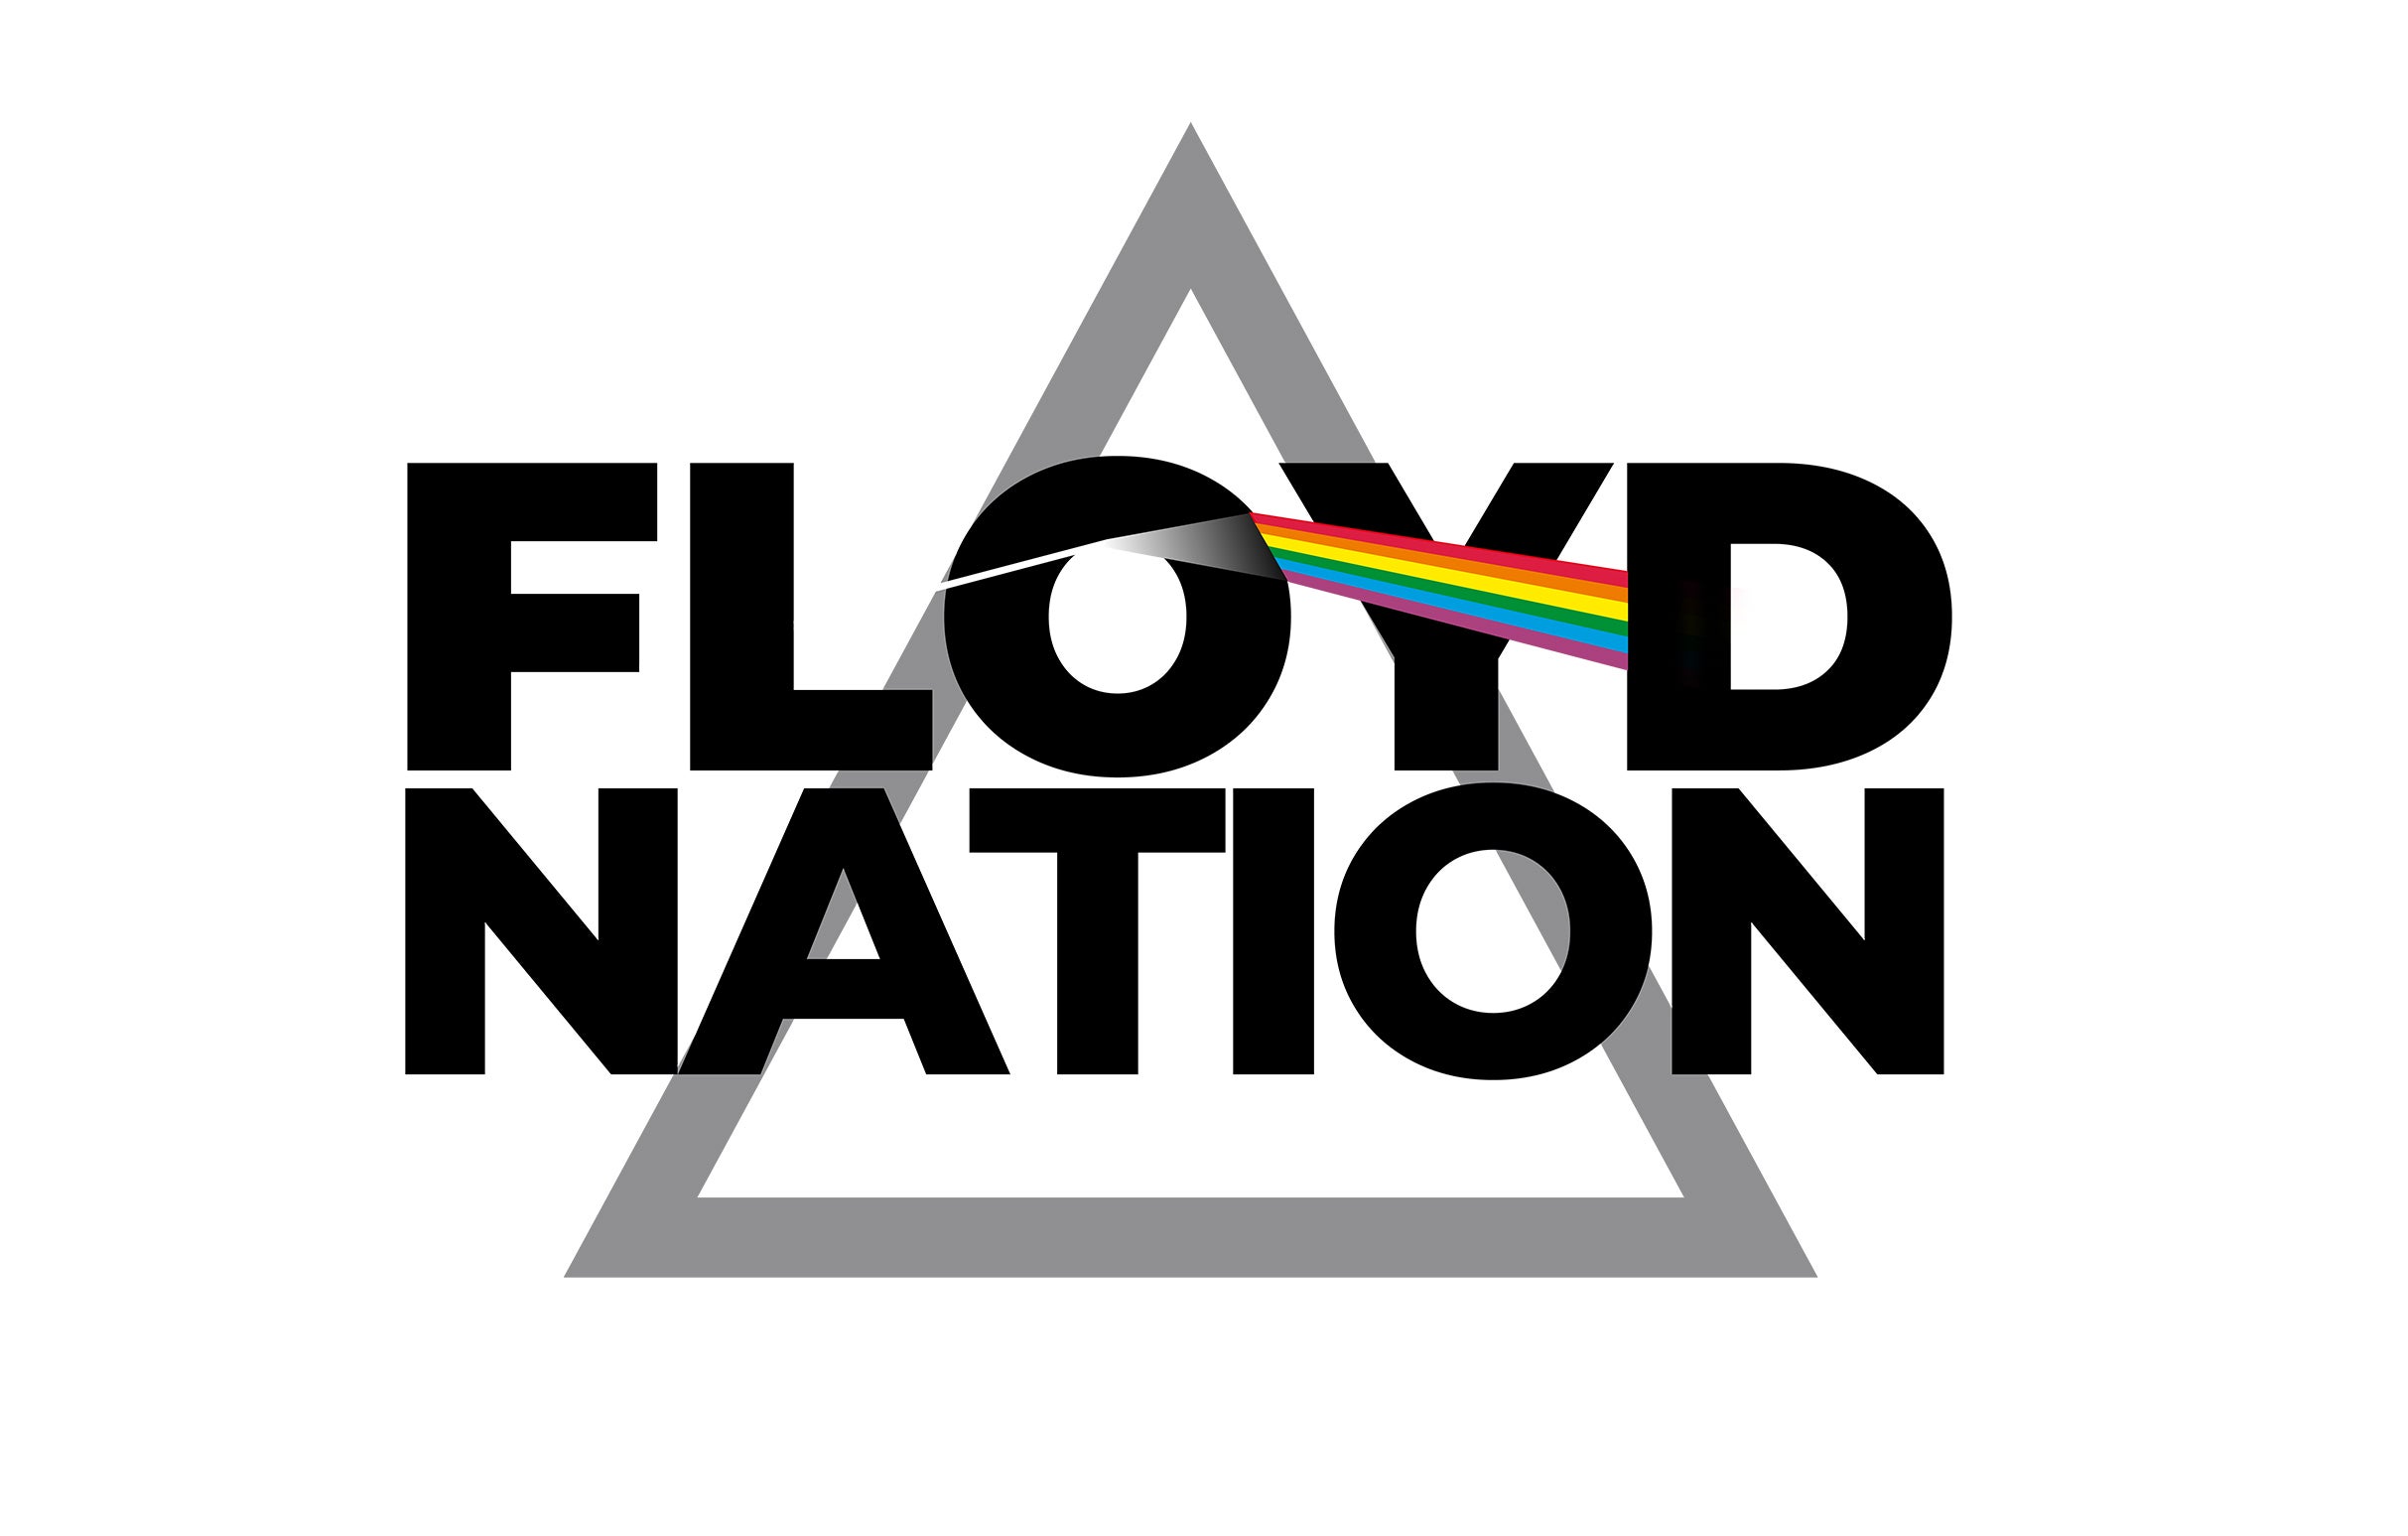 Floyd Nation in Mobile promo photo for AEG presale offer code